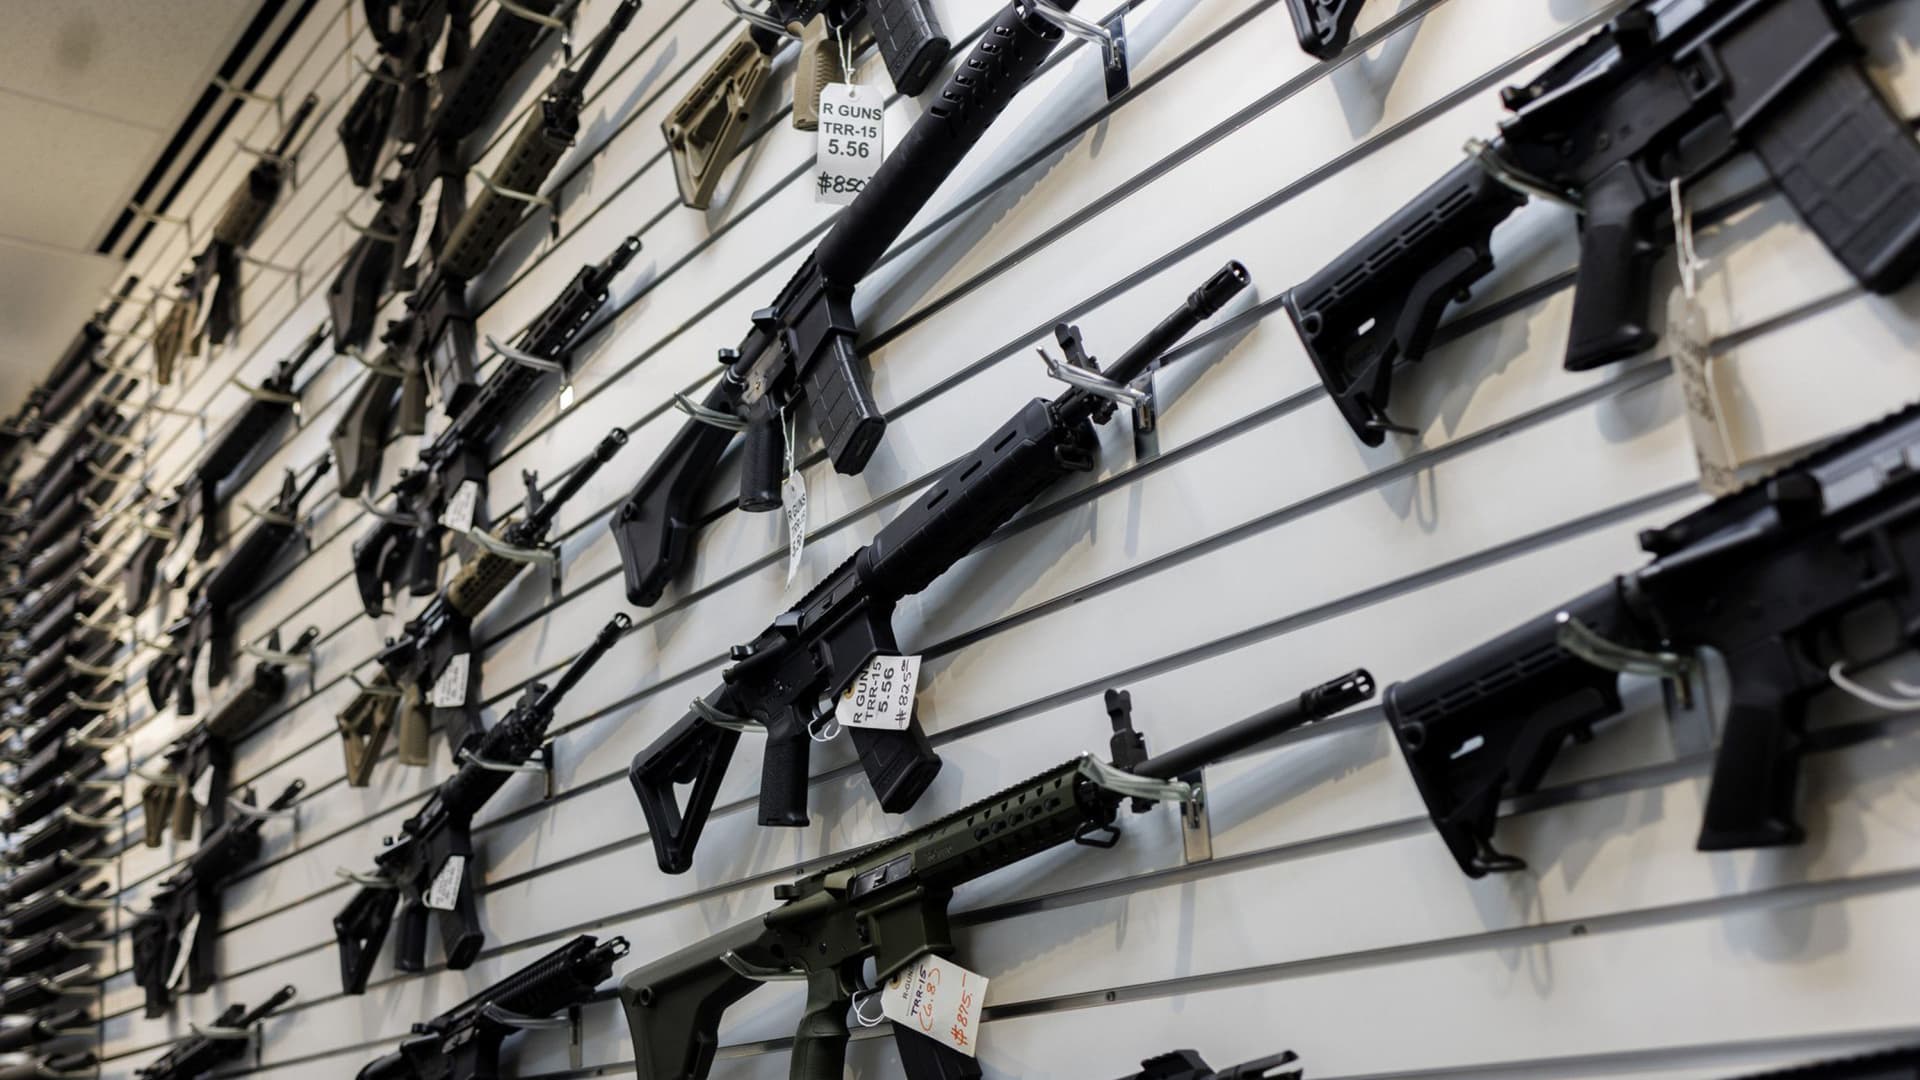 Gun companies reckon with declining demand after pandemic surge